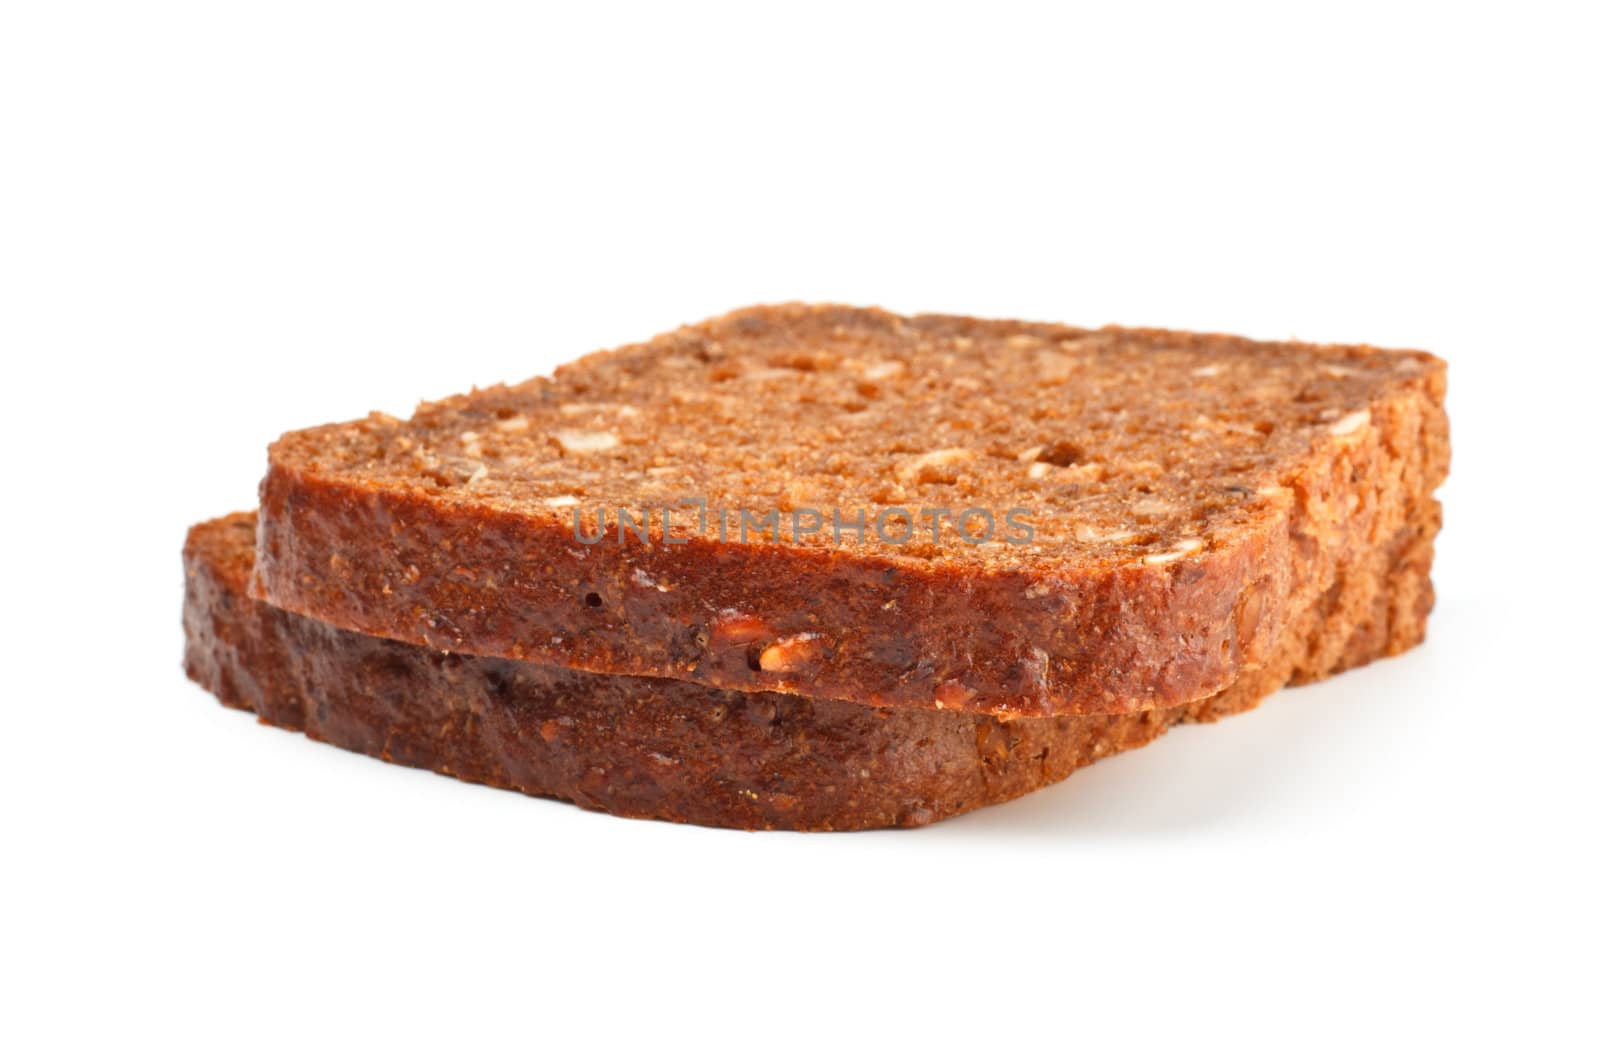 grain bread slices by petr_malyshev